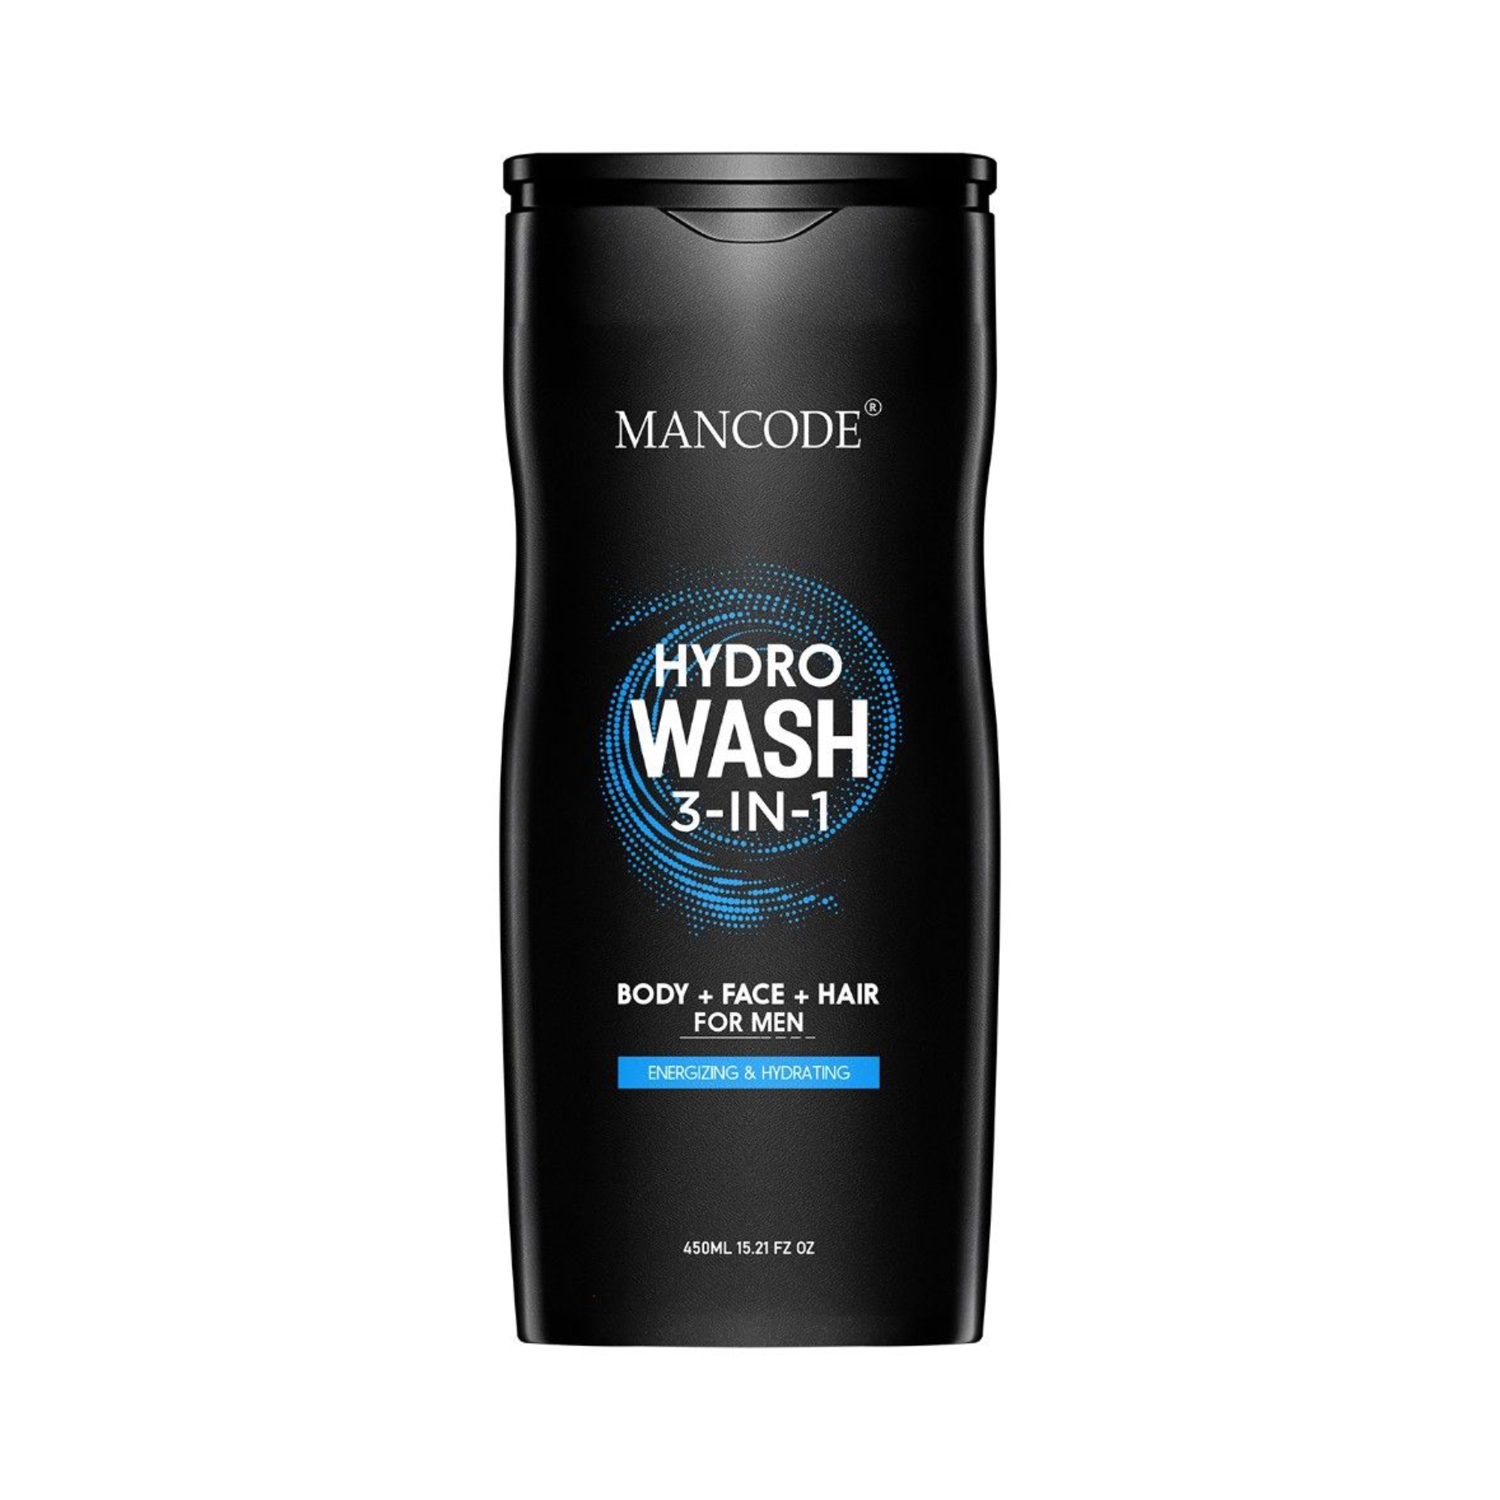 Mancode | Mancode Hydro Wash 3-In-1 Body Wash (450ml)